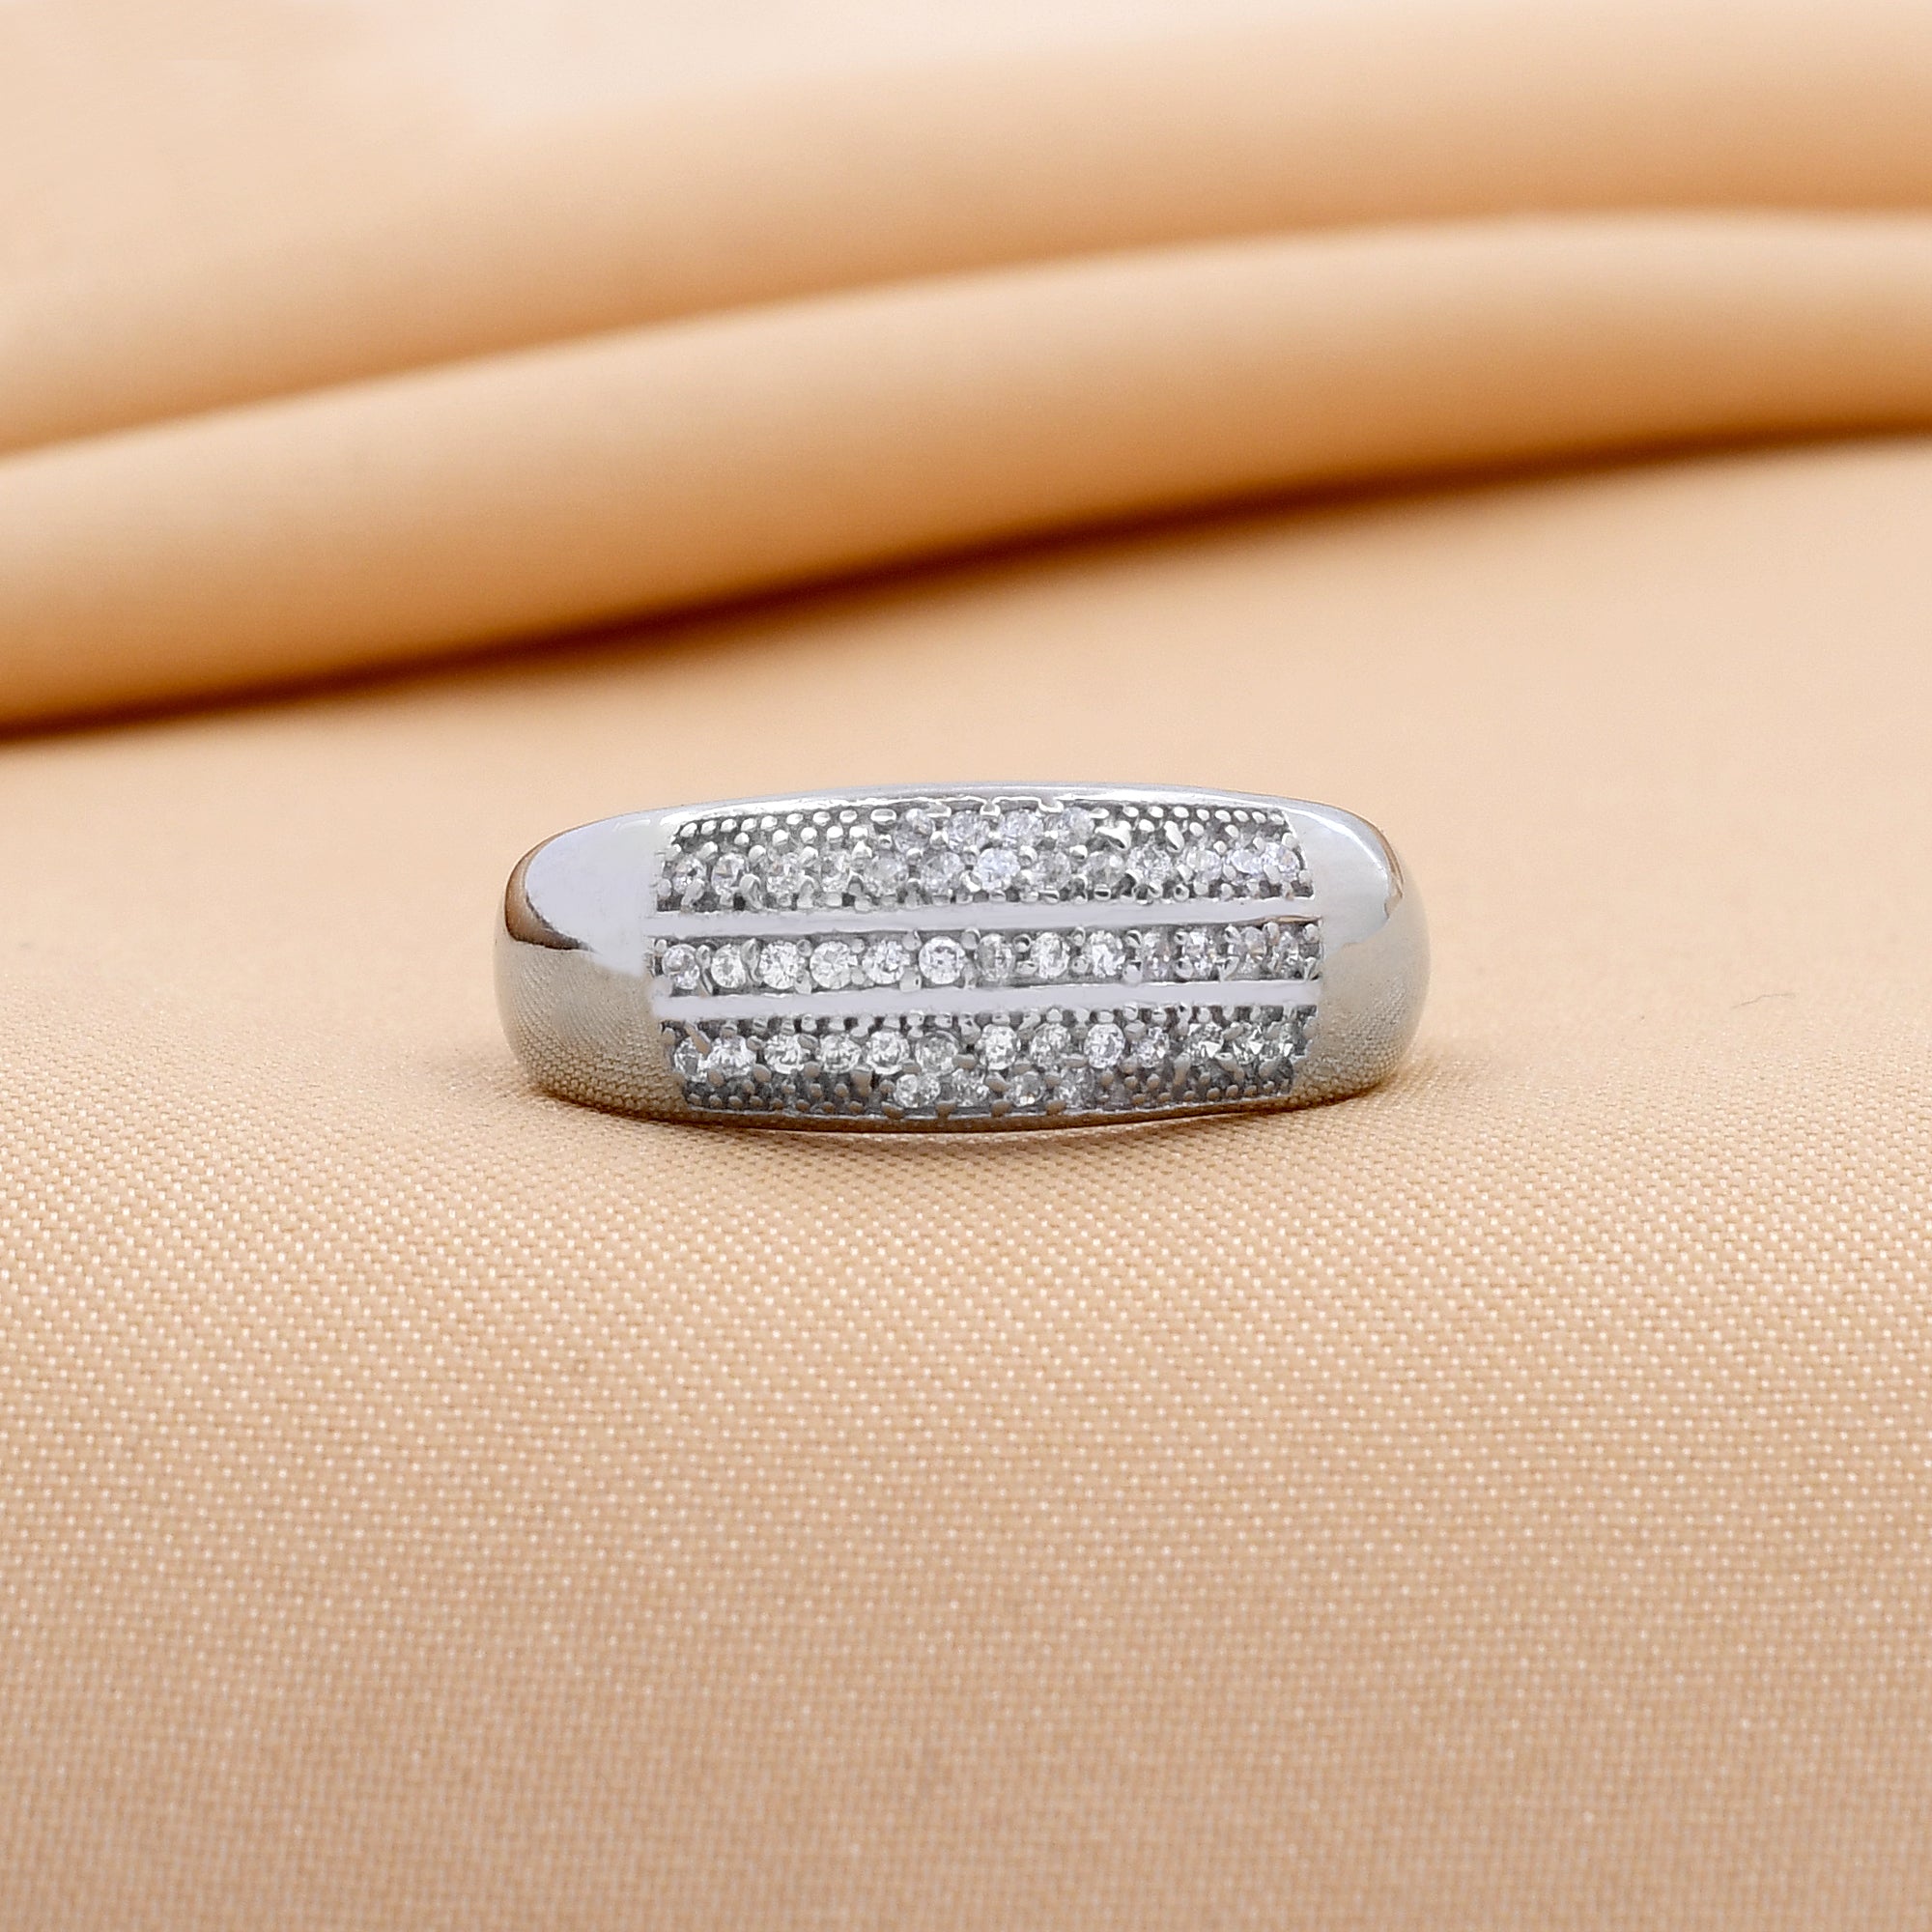 Stunning 925 Sterling Silver Ring